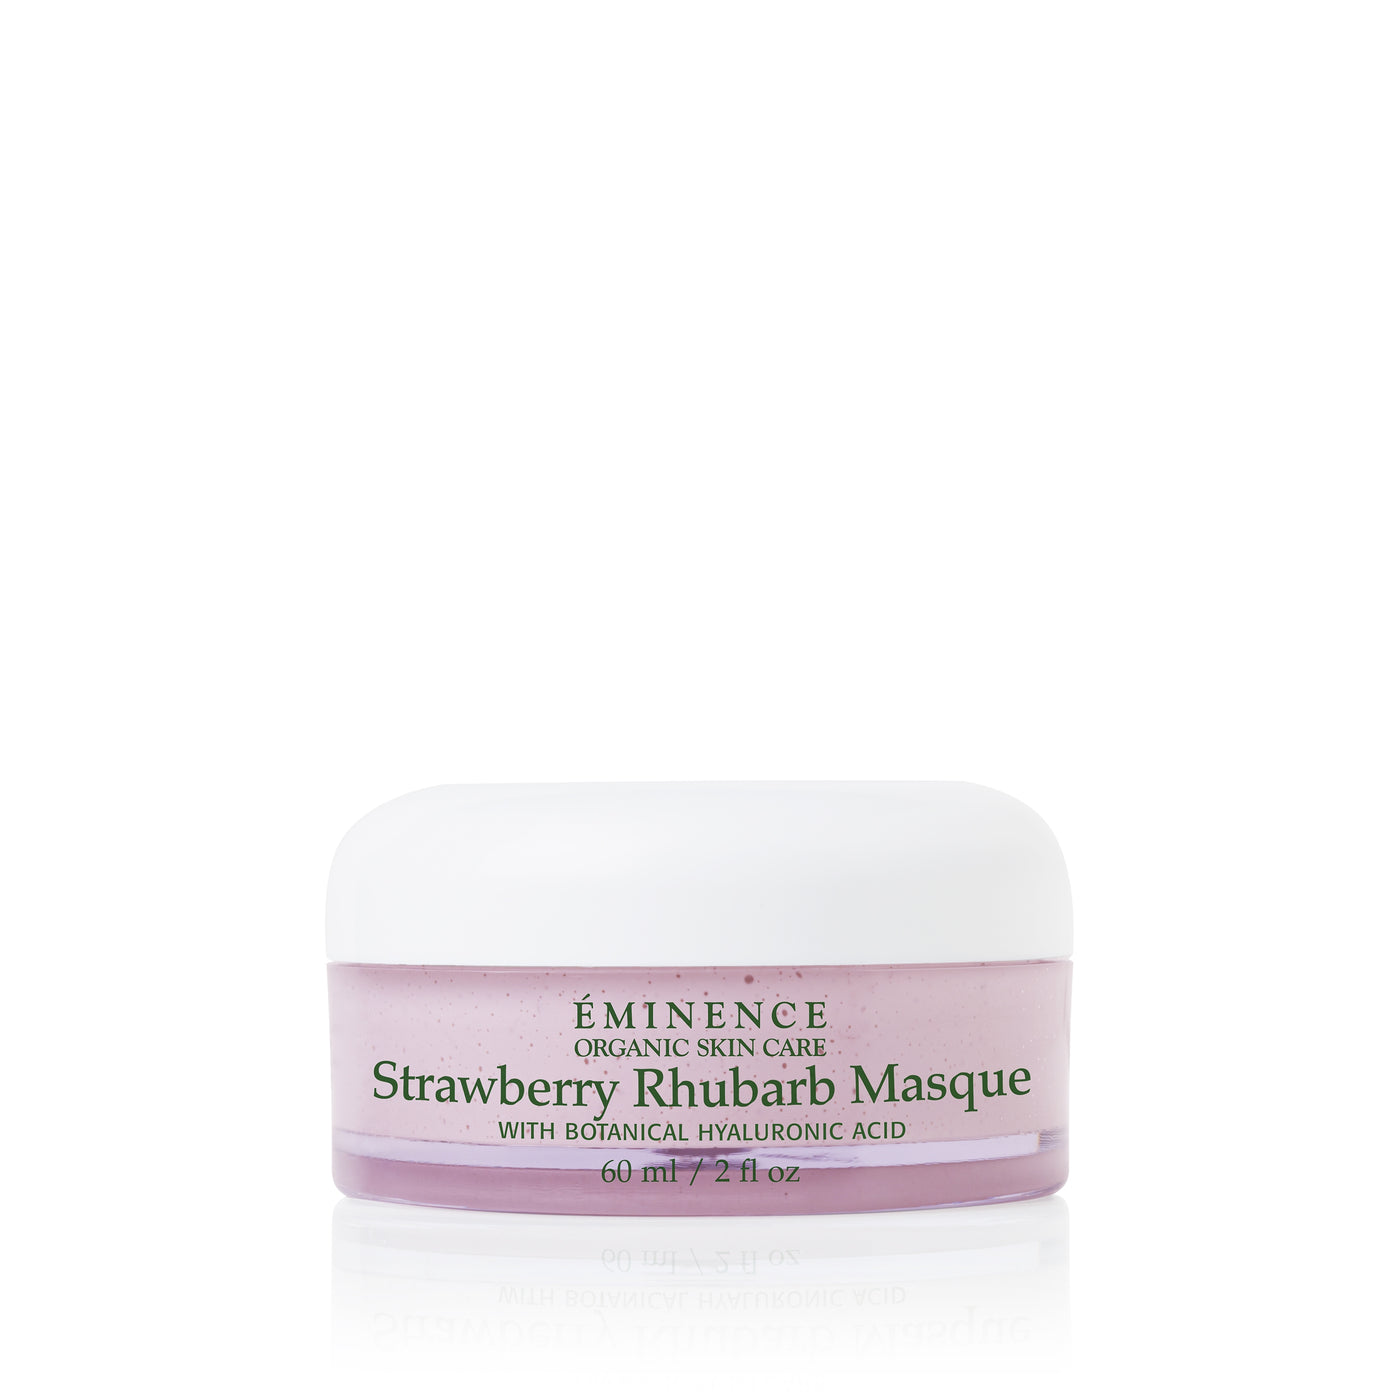 Eminence Organics Strawberry Rhubarb Masque - Radiance Clean Beauty